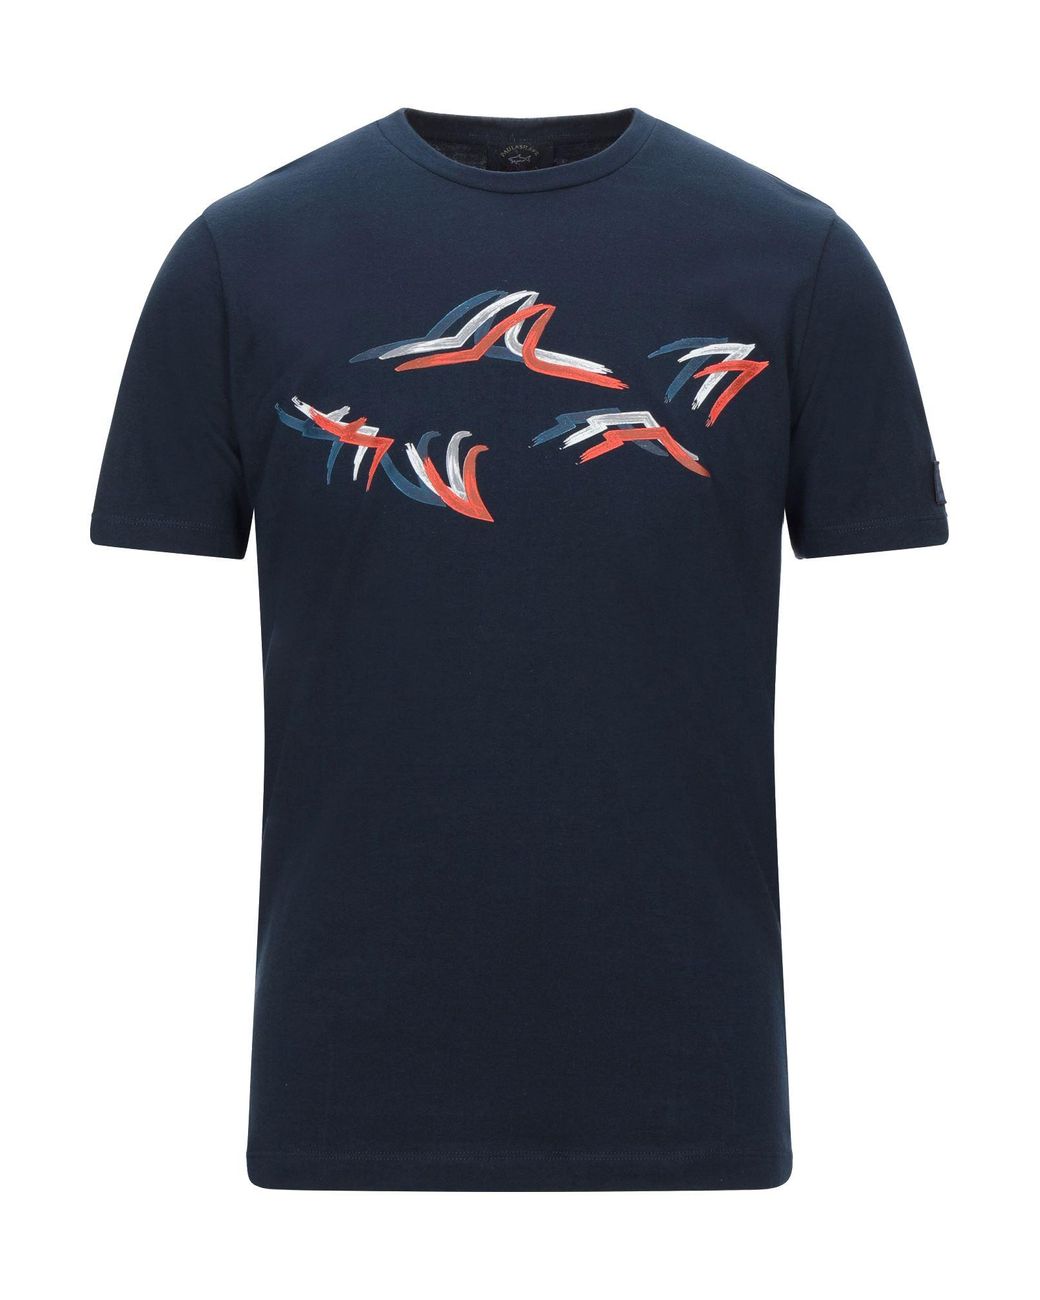 Paul & Shark Cotton T-shirt in Dark Blue (Blue) for Men - Lyst